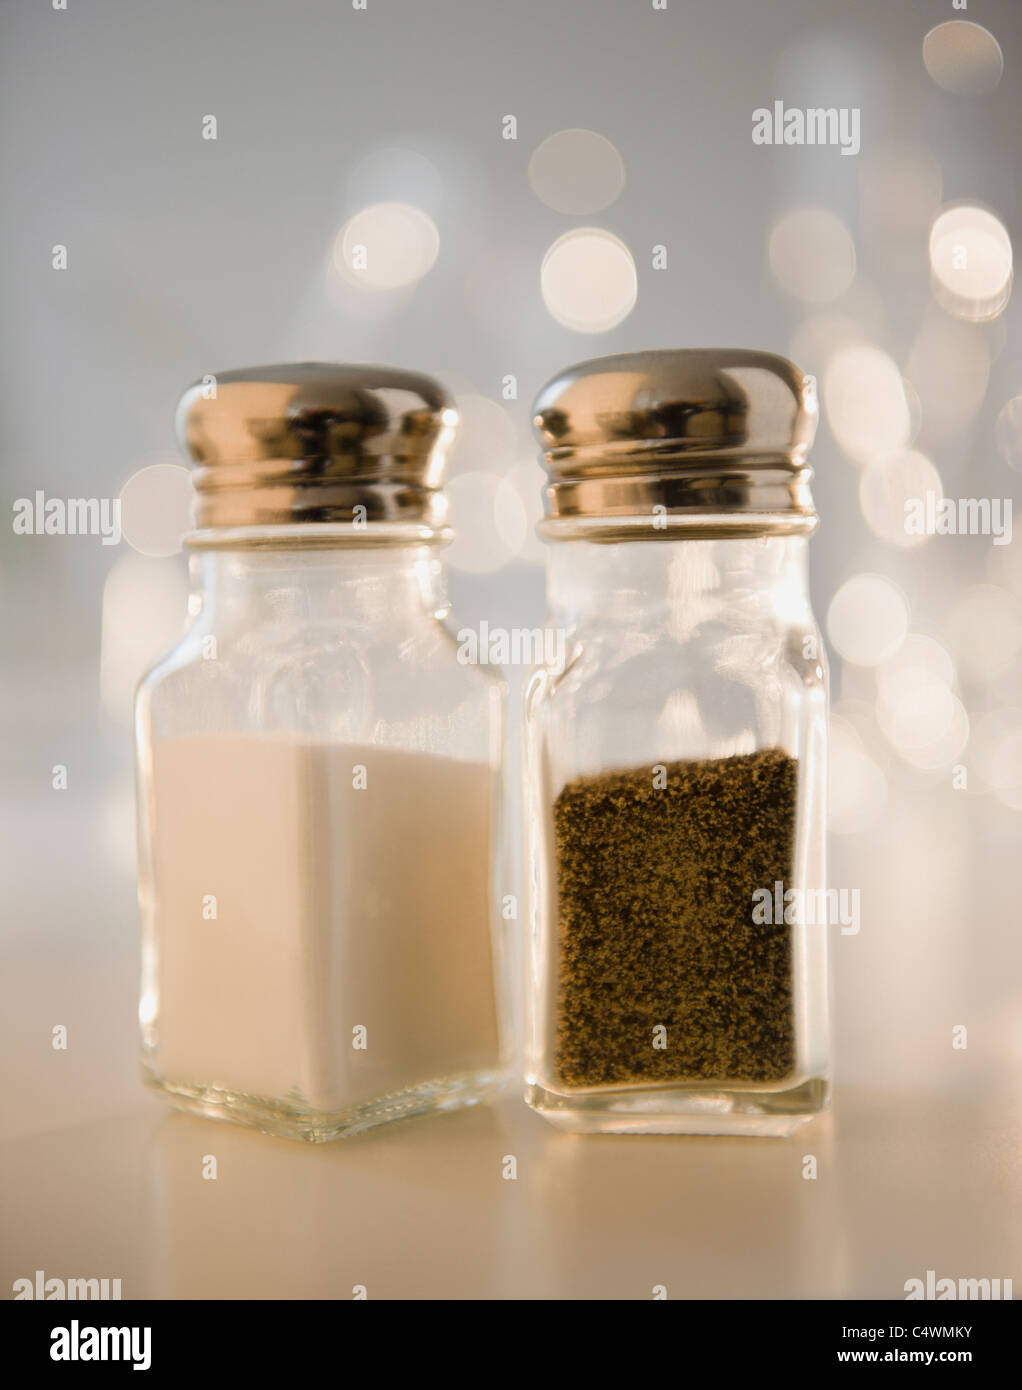 https://c8.alamy.com/comp/C4WMKY/studio-shot-of-salt-and-pepper-shakers-C4WMKY.jpg